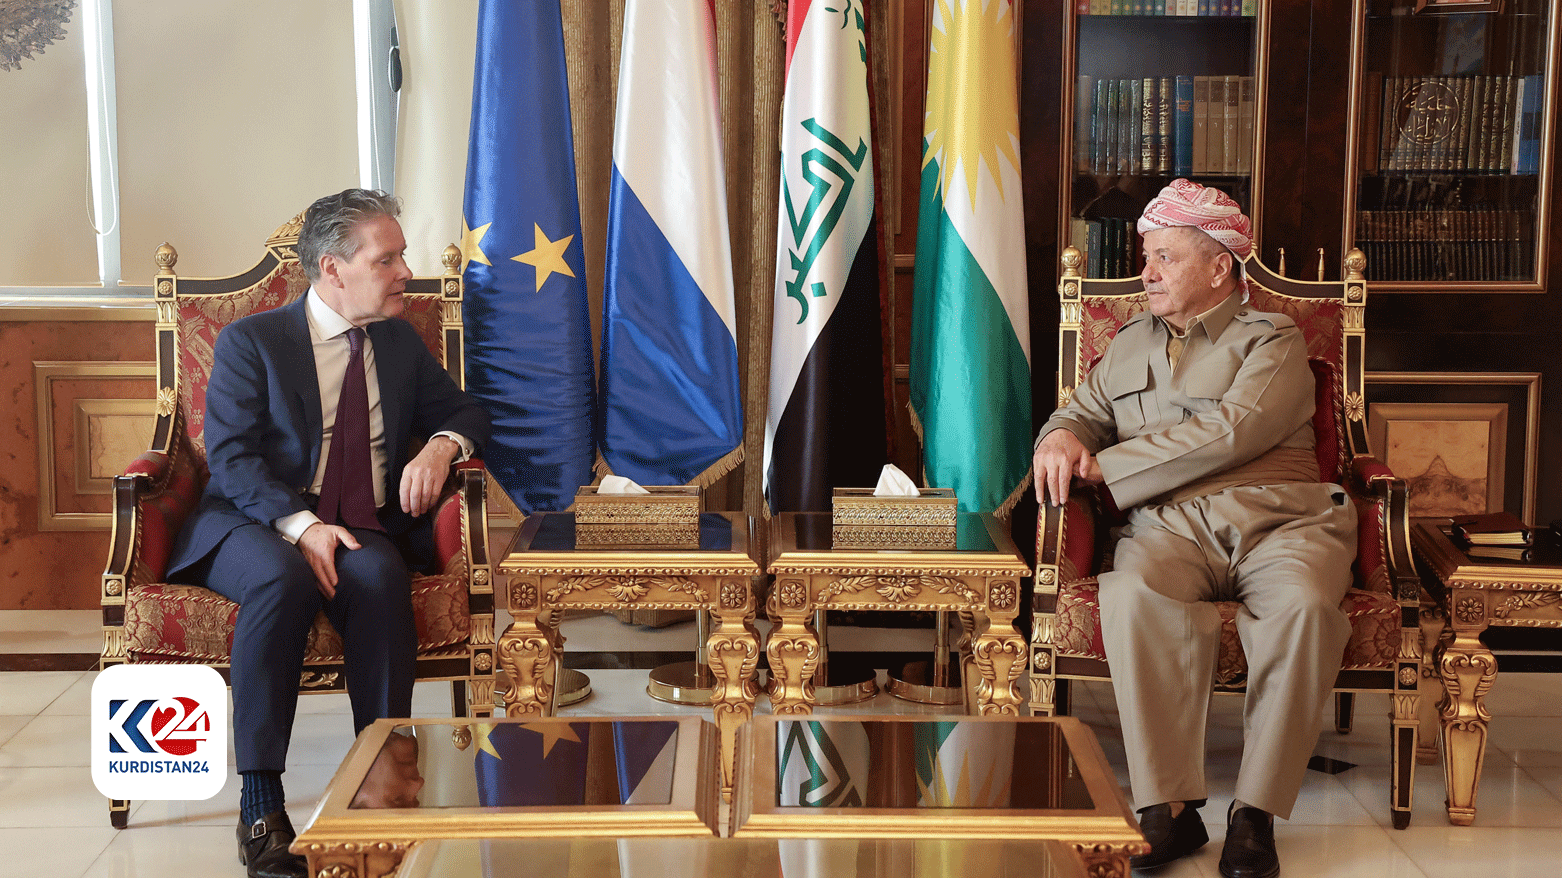 KDP President Masoud Barzani Dutch diplomat discuss bilateral ties